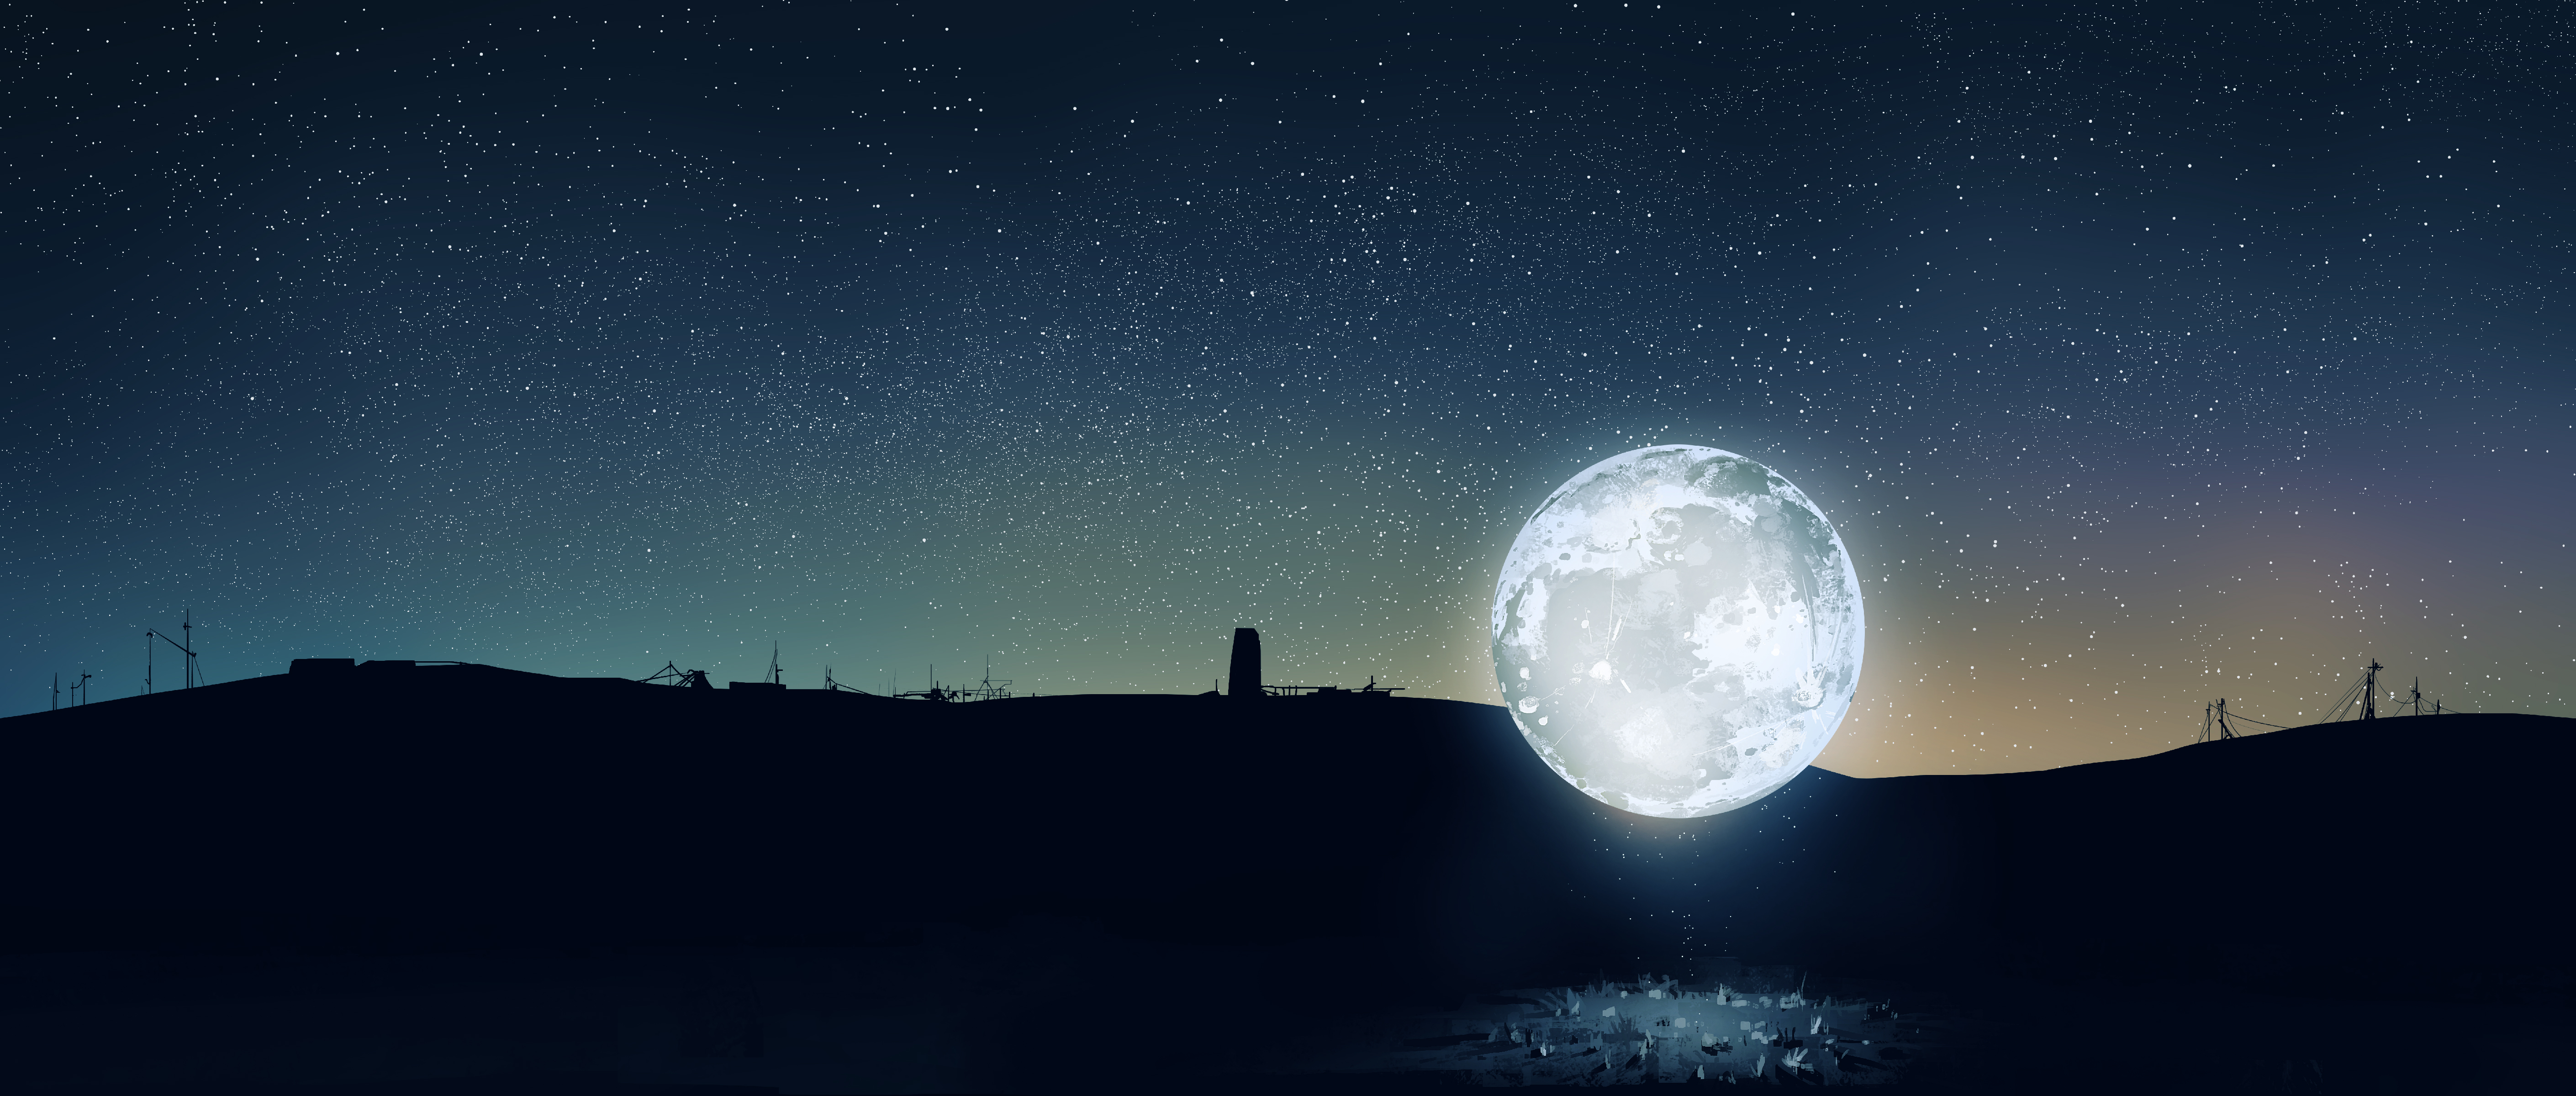 Gracile Digital Art Artwork Illustration Night Stars Moon Starry Night Sky Simple Background 5640x2400